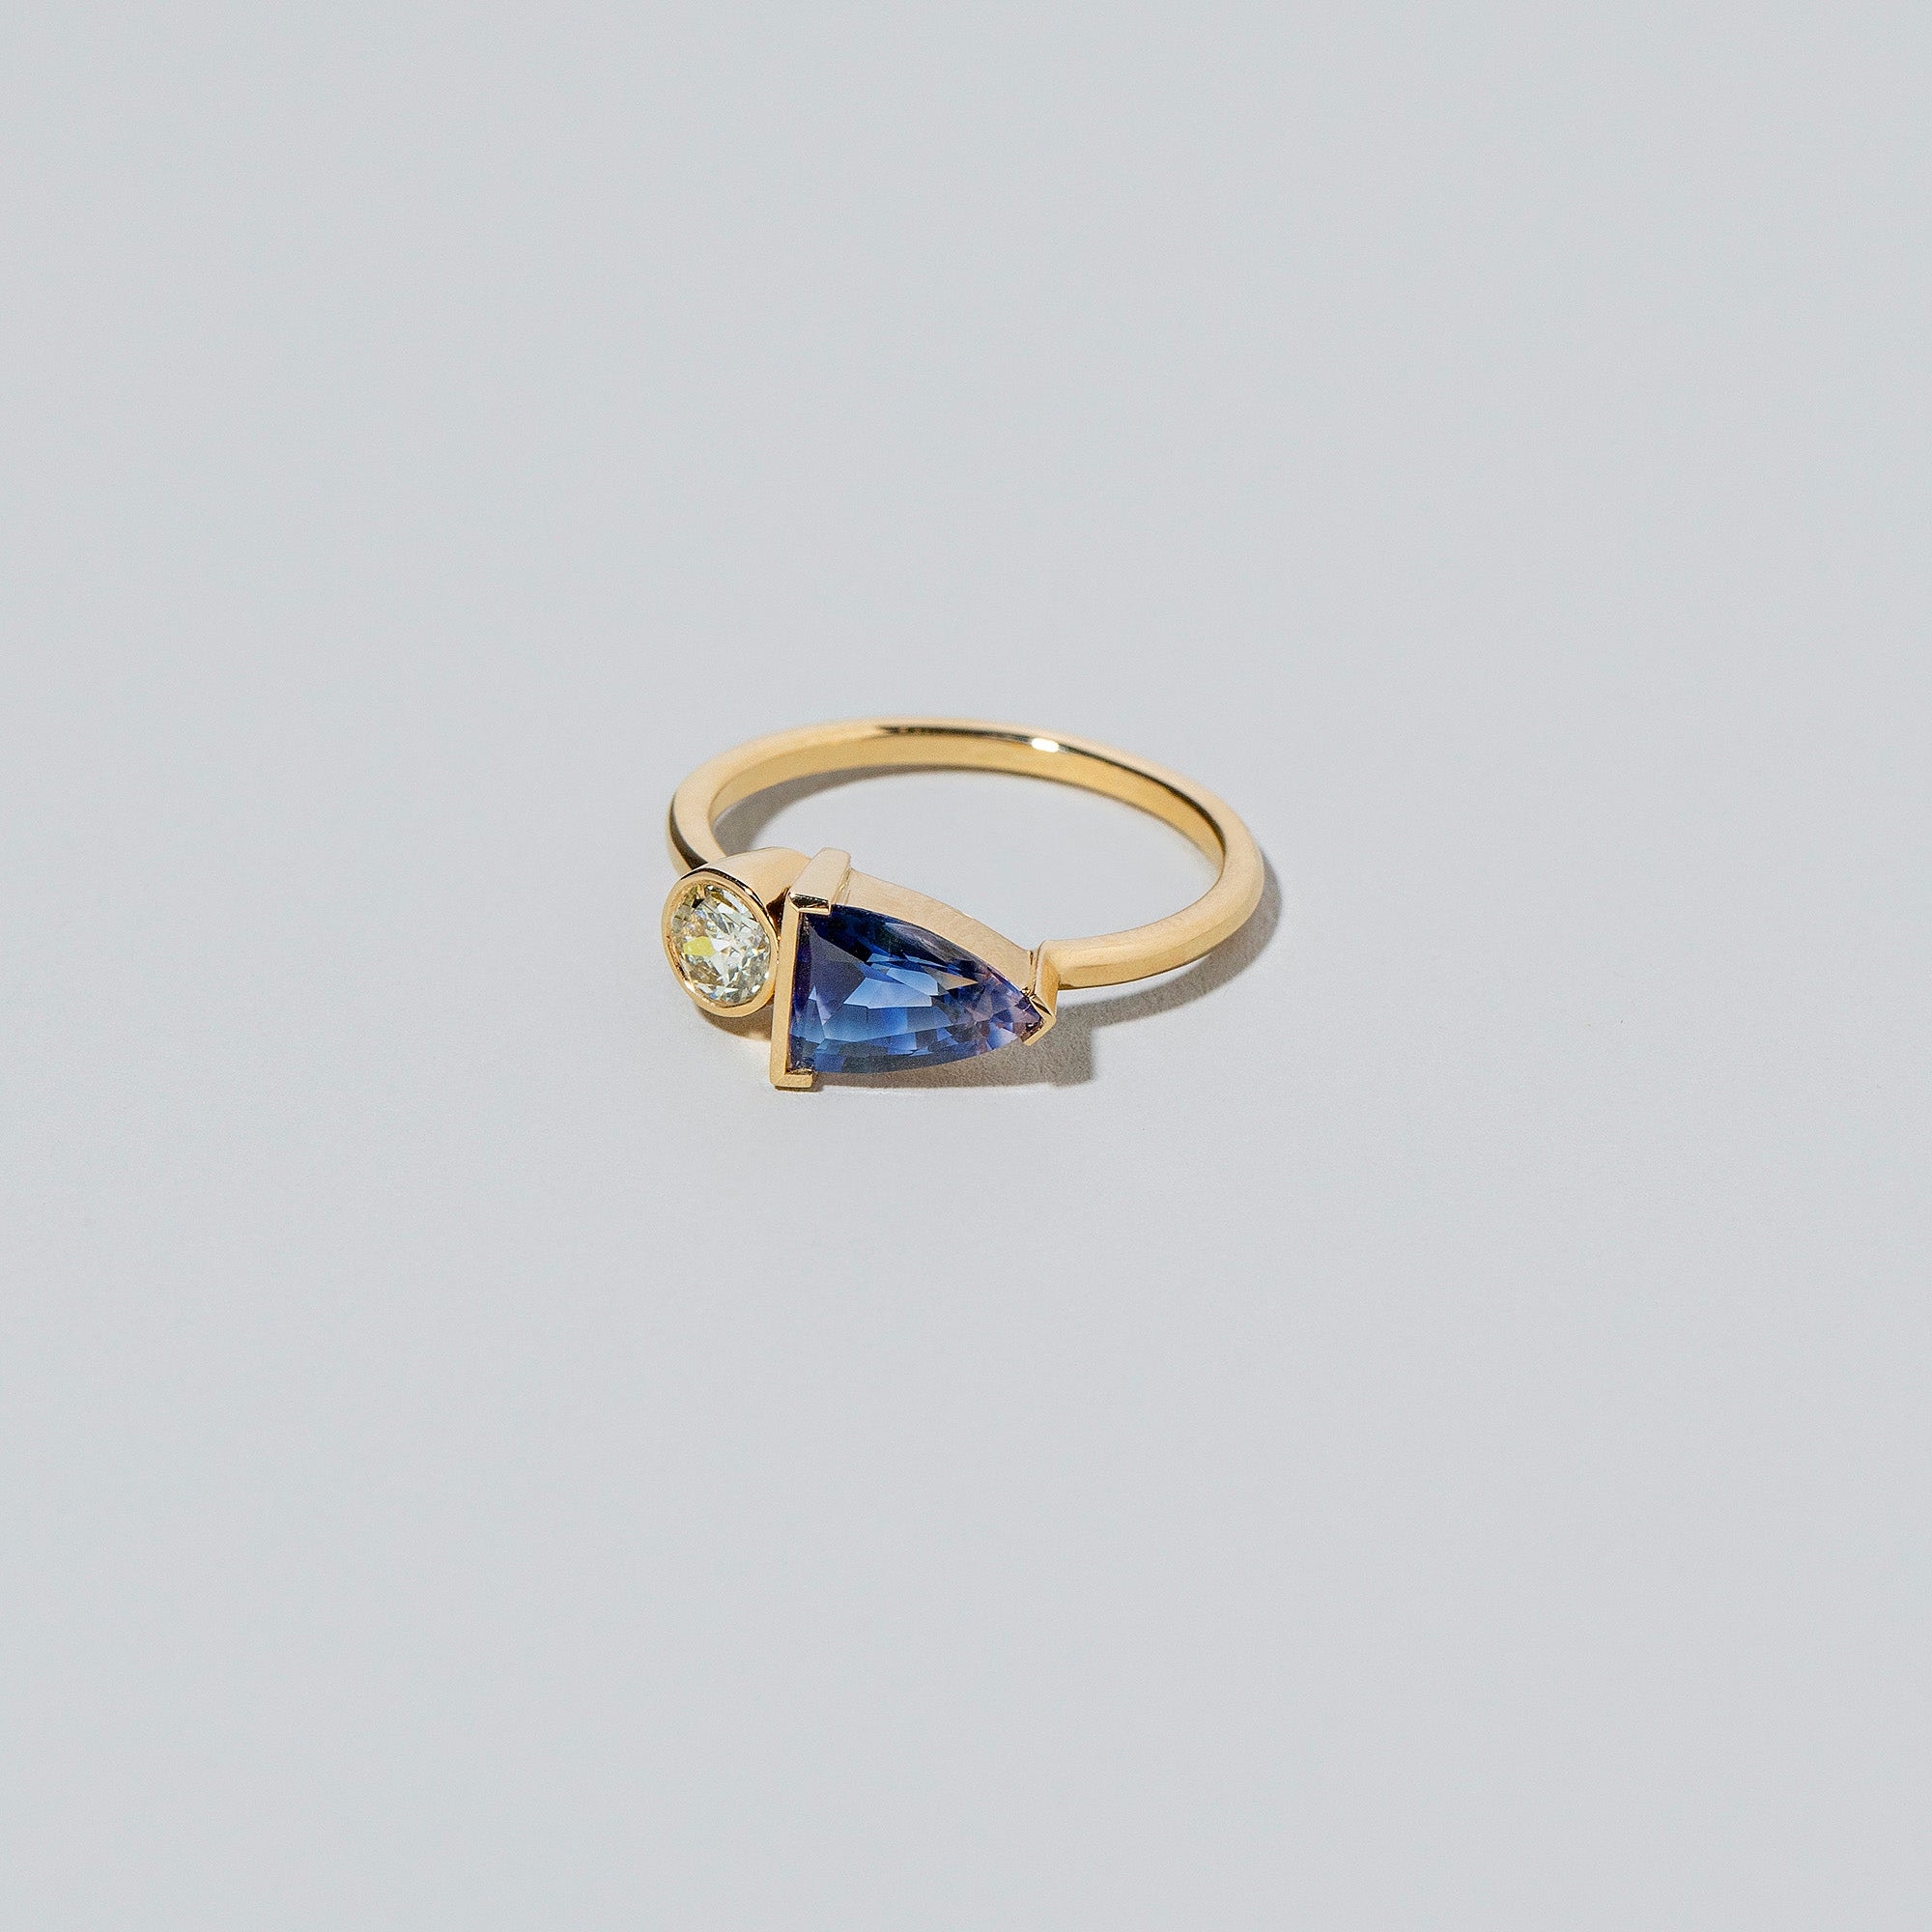 product_details:: Greenwood Ring on light color background.